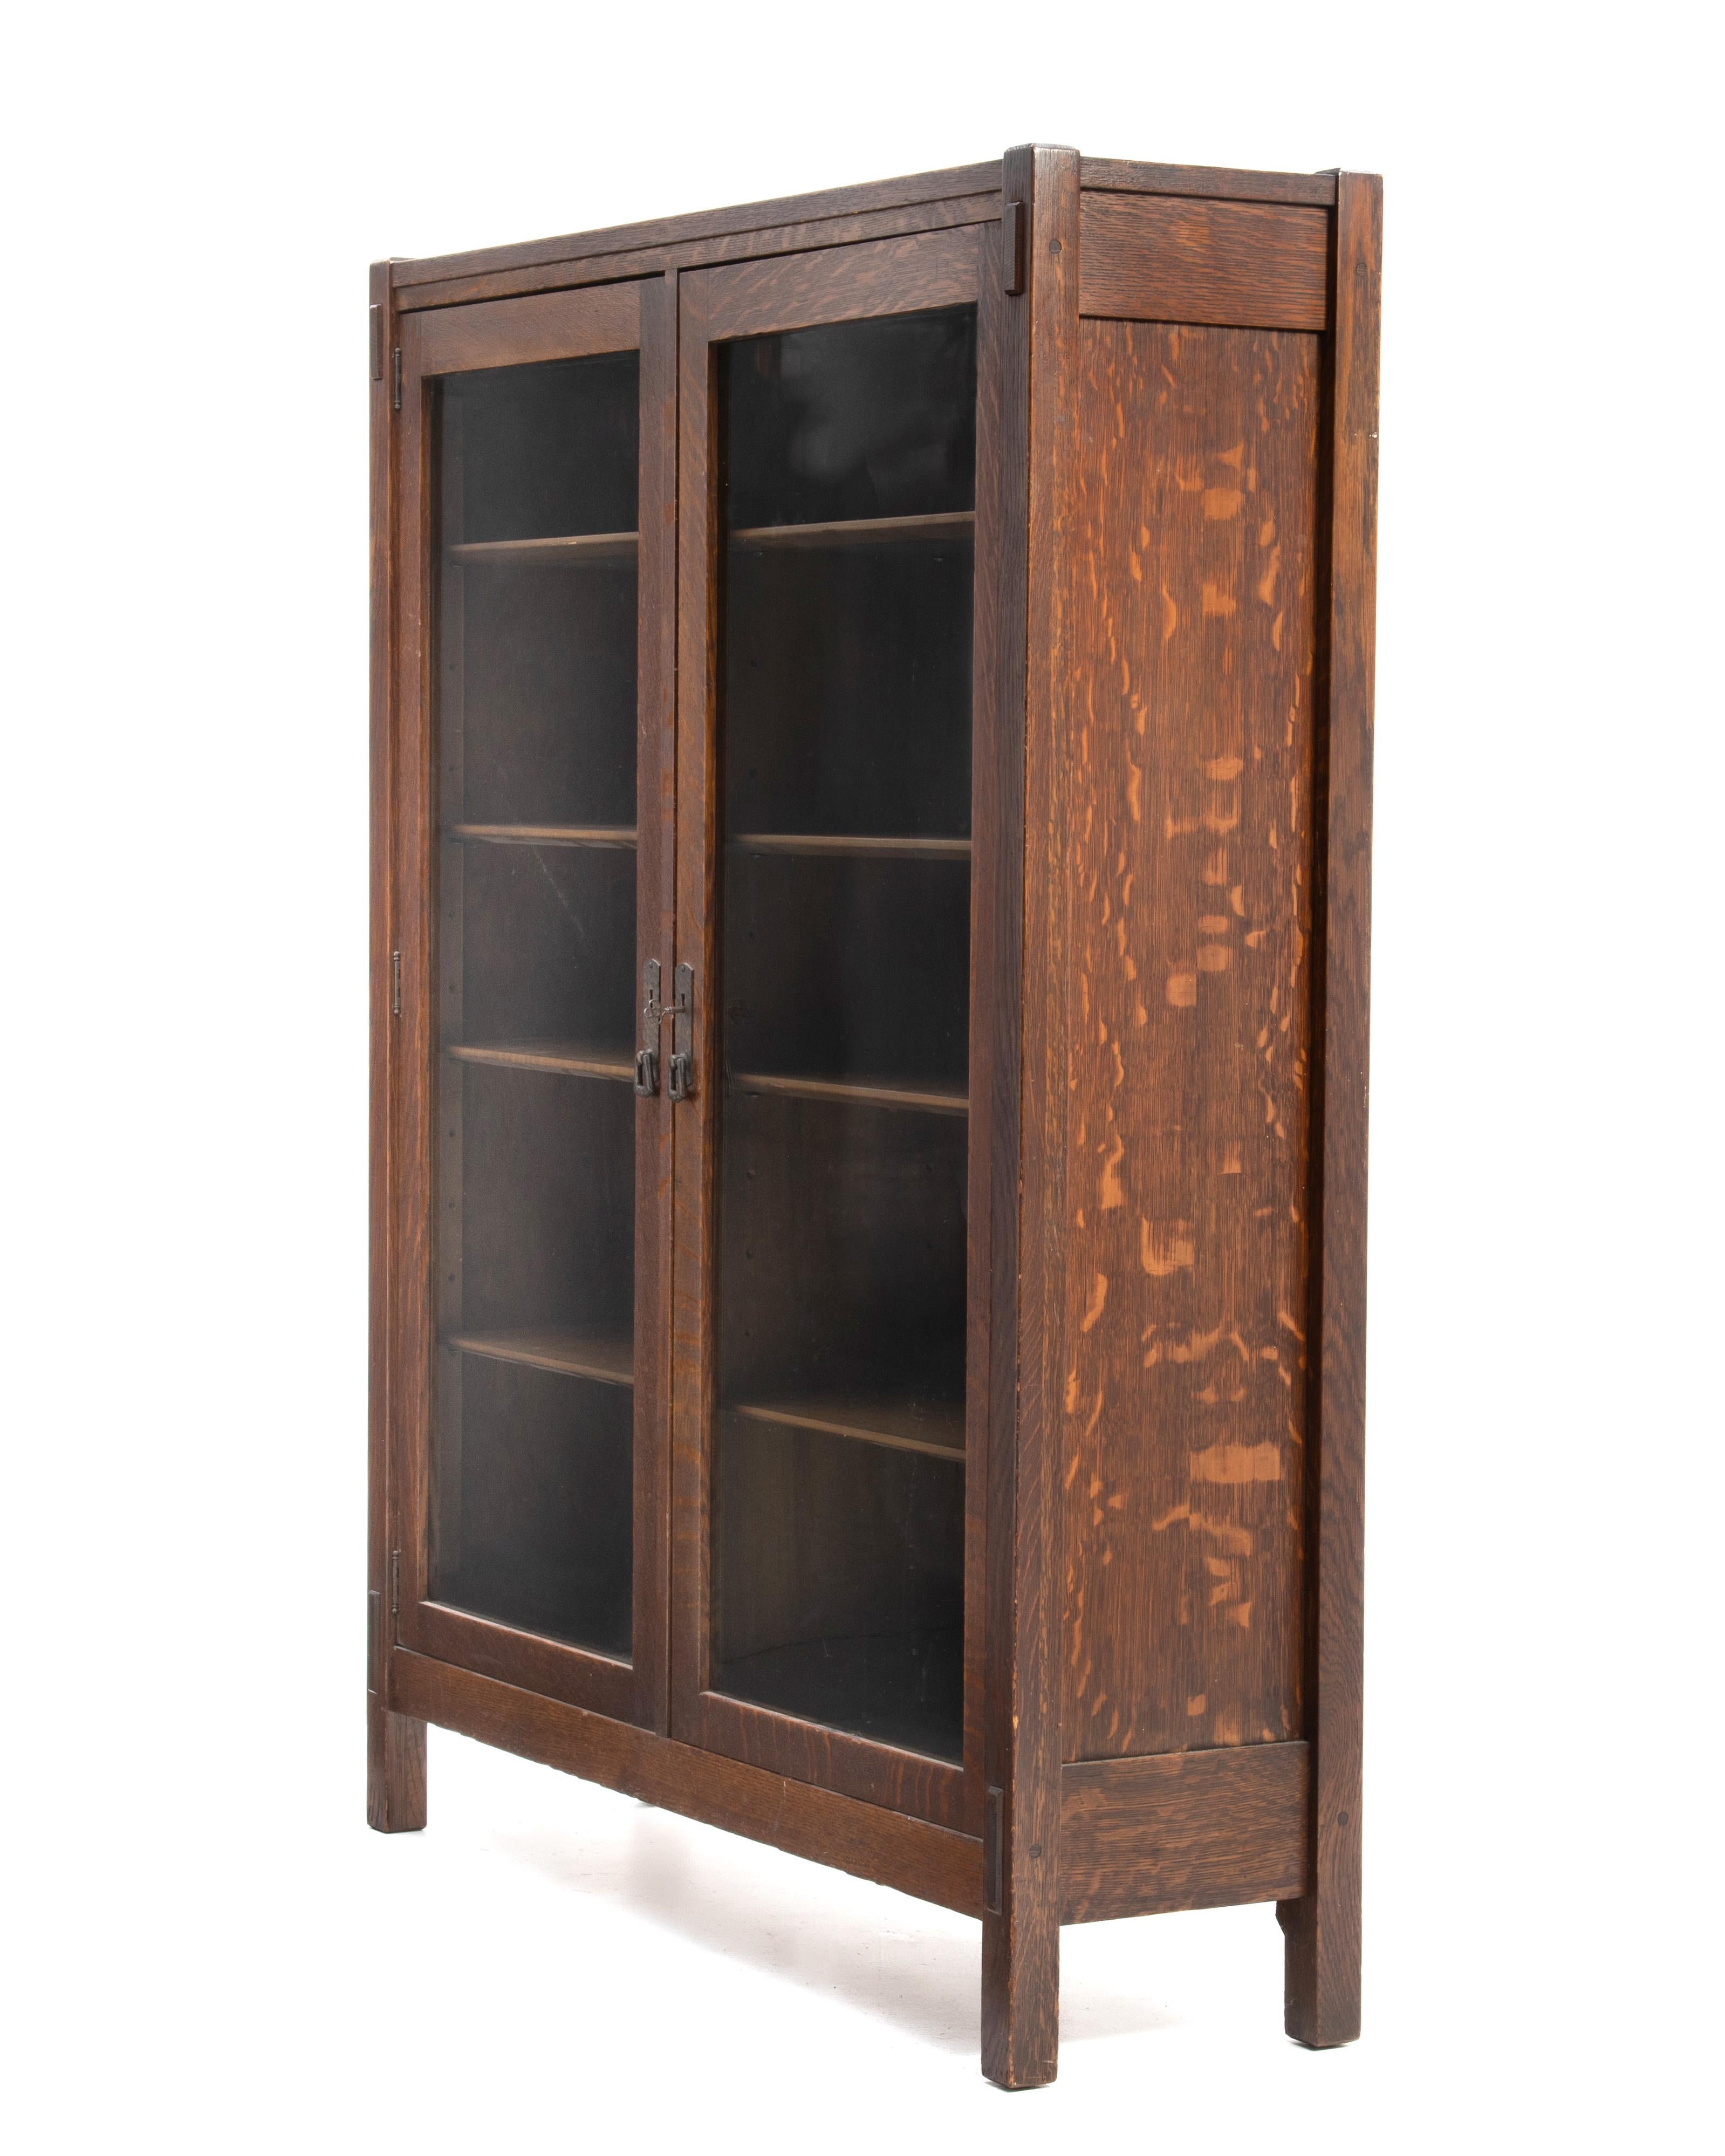 American Lifetime Arts & Crafts Mission Oak Bookcase Pegged Through Tenon Original Finish For Sale